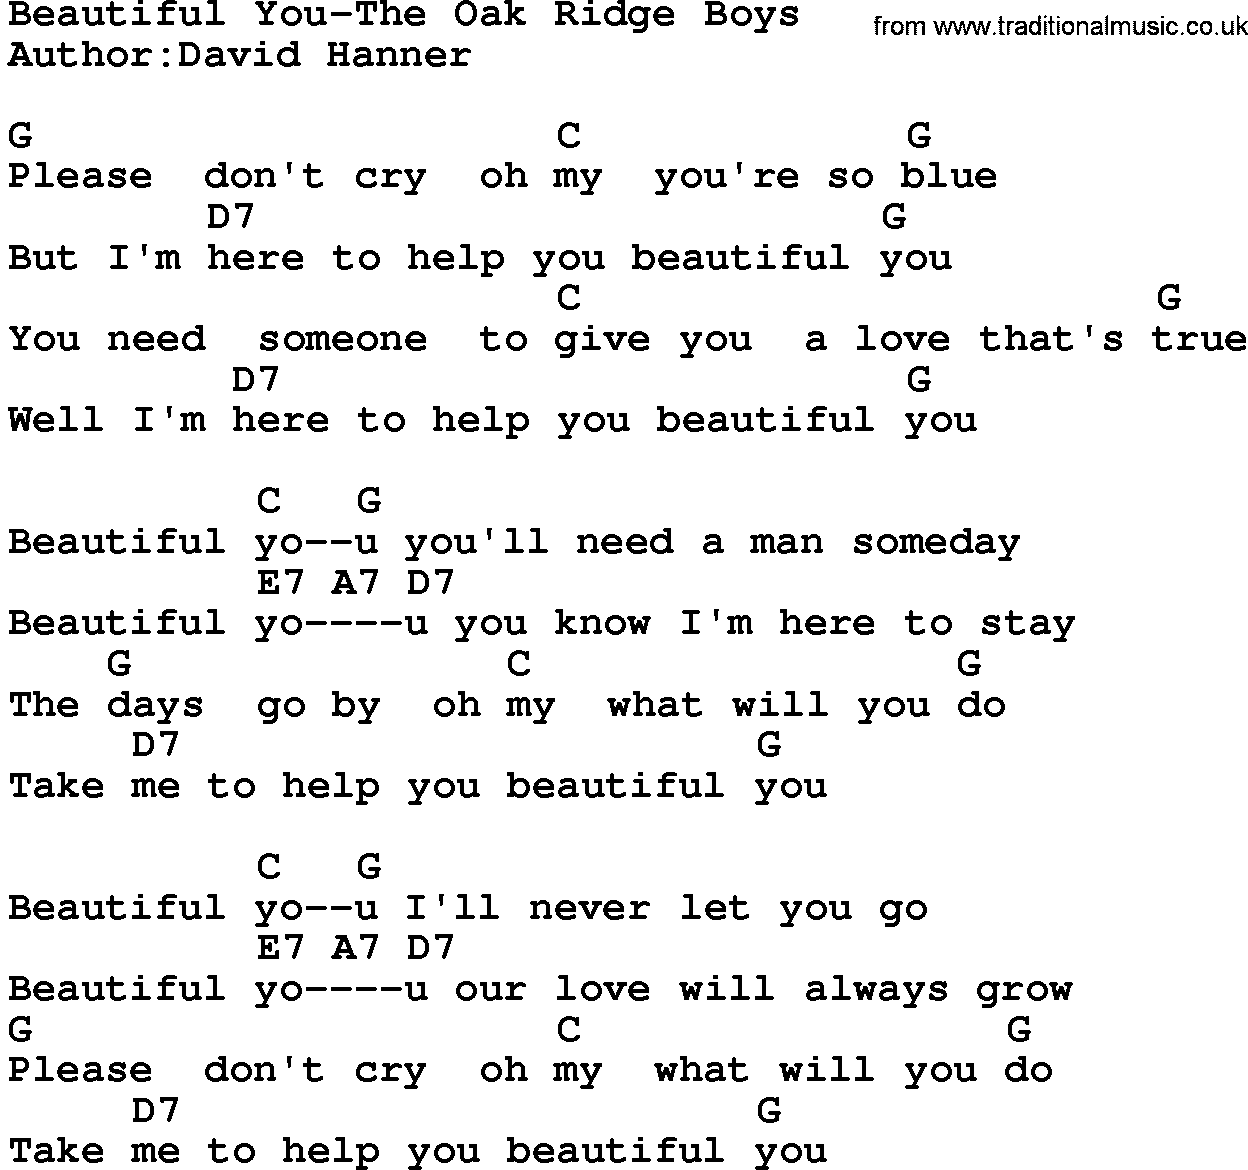 Country music song: Beautiful You-The Oak Ridge Boys lyrics and chords